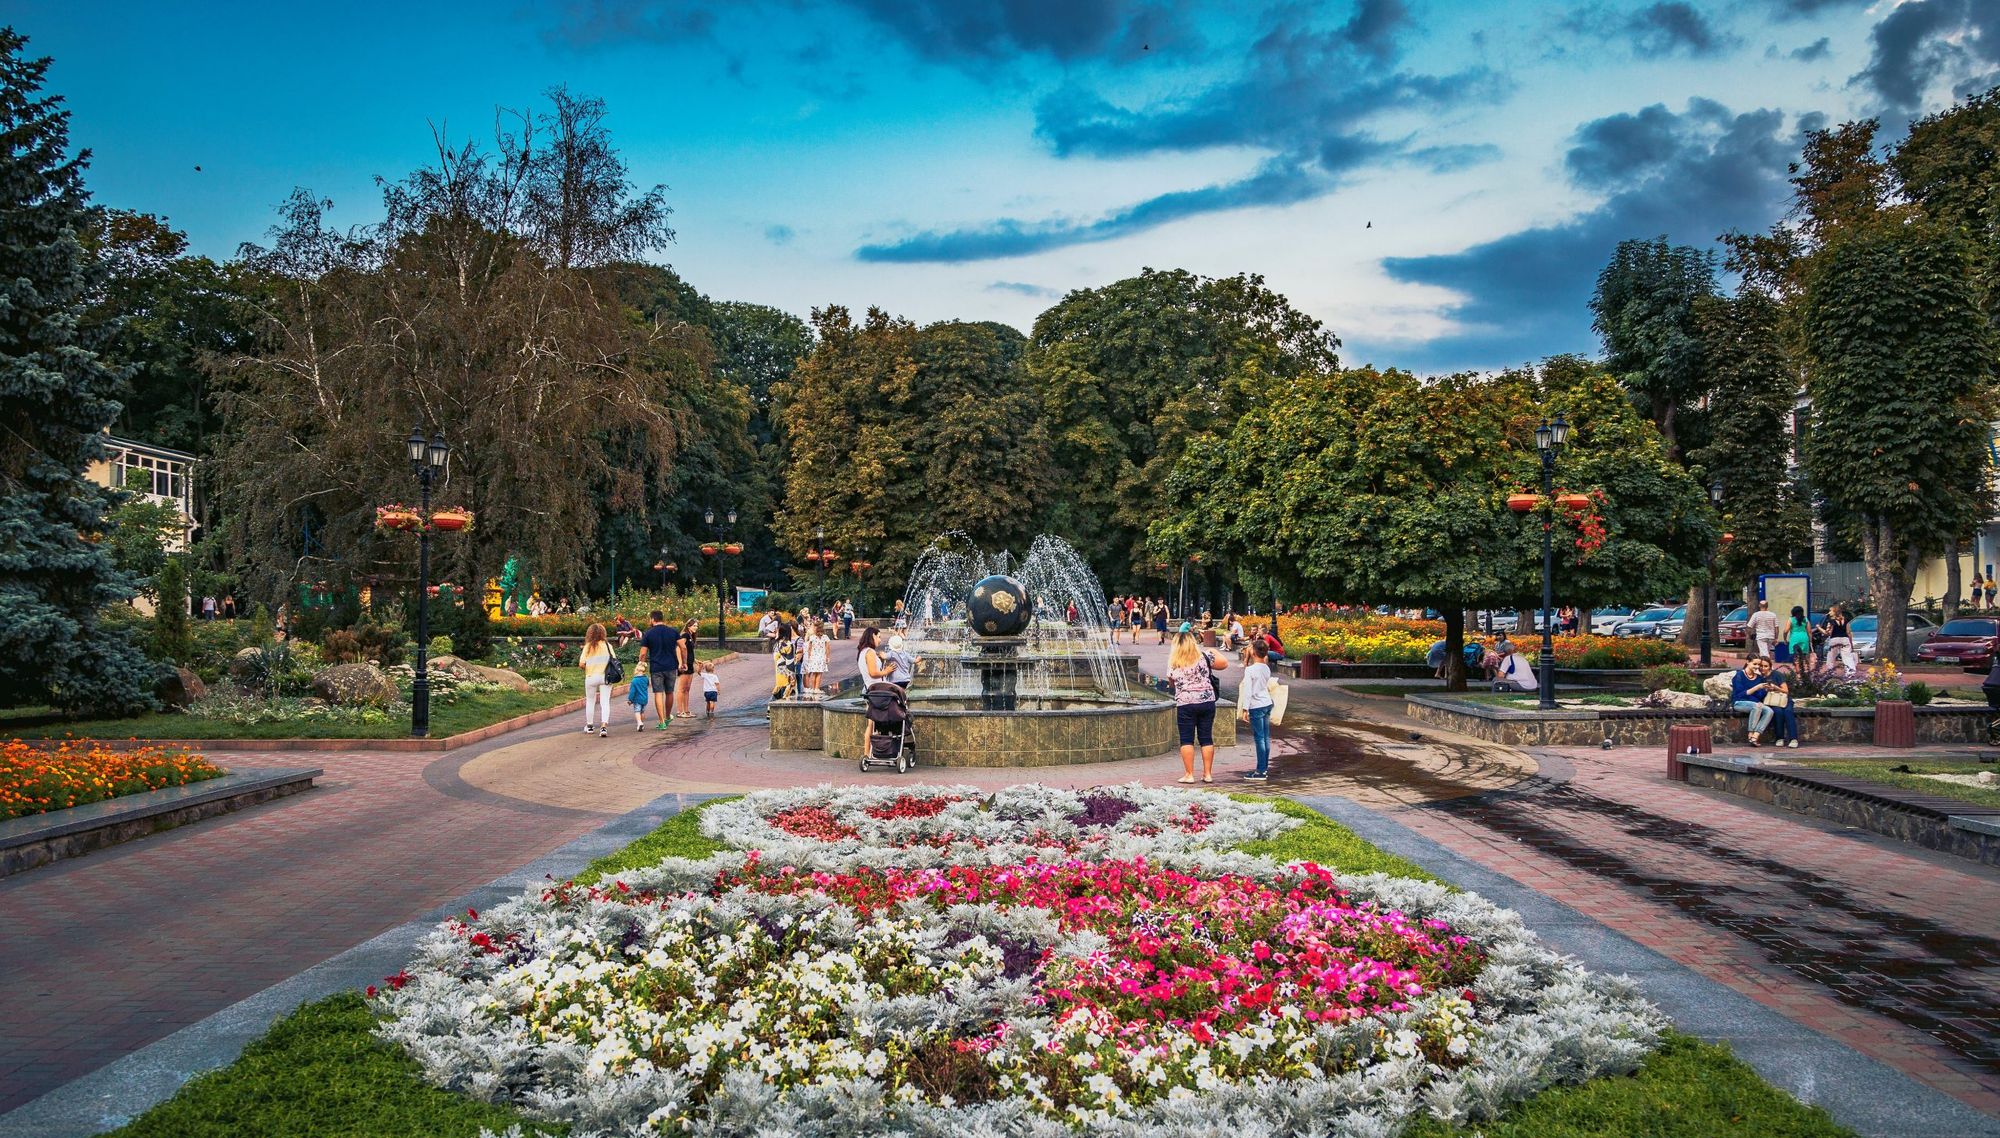 Taras Shevchenko Public Garden